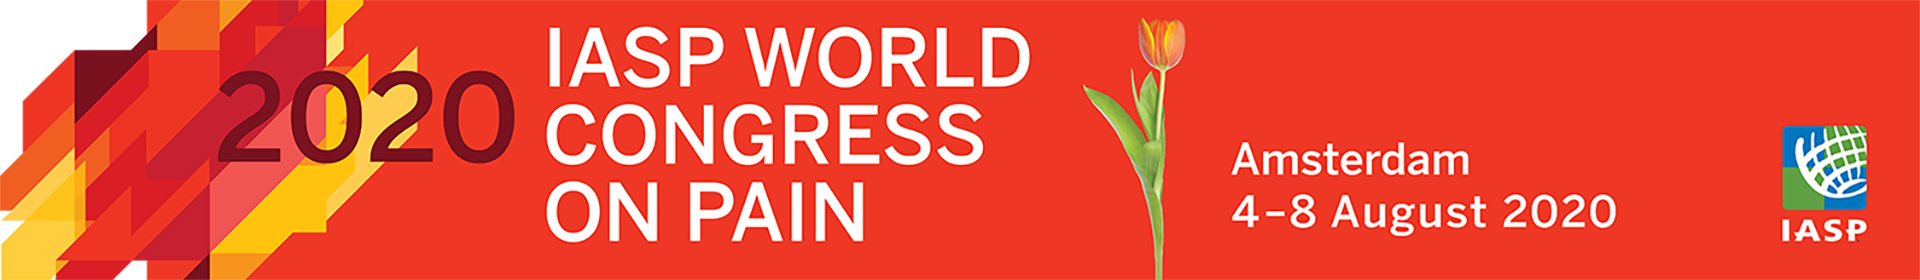 IASP 2020 World Congress on Pain Event Banner